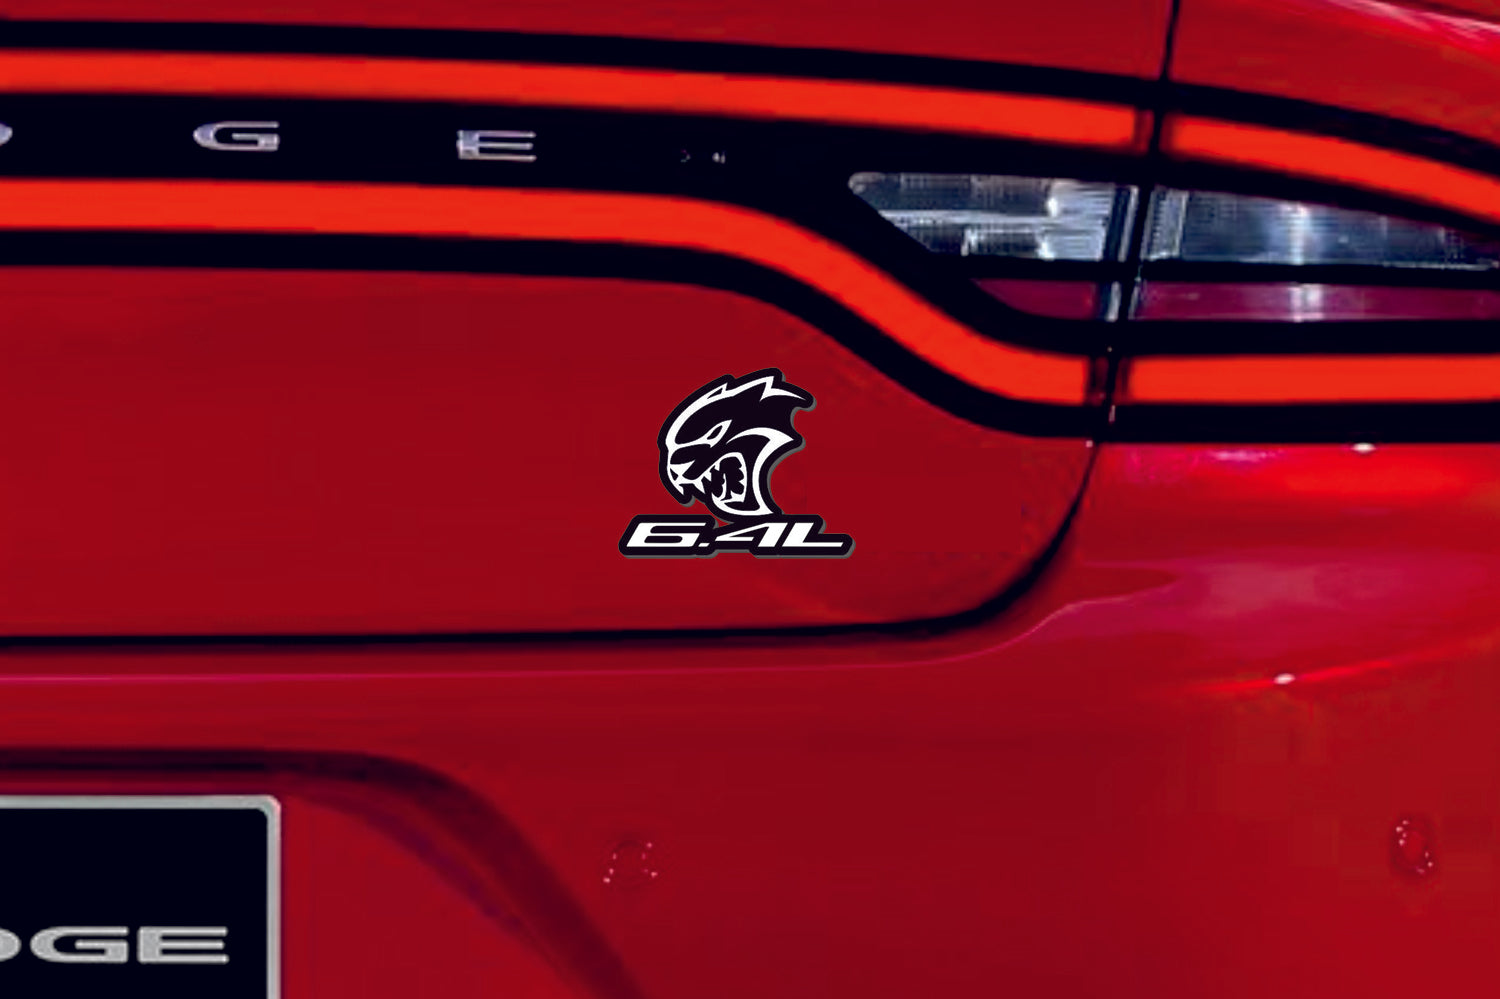 Jeep tailgate trunk rear emblem with Hellcat 6.4L logo